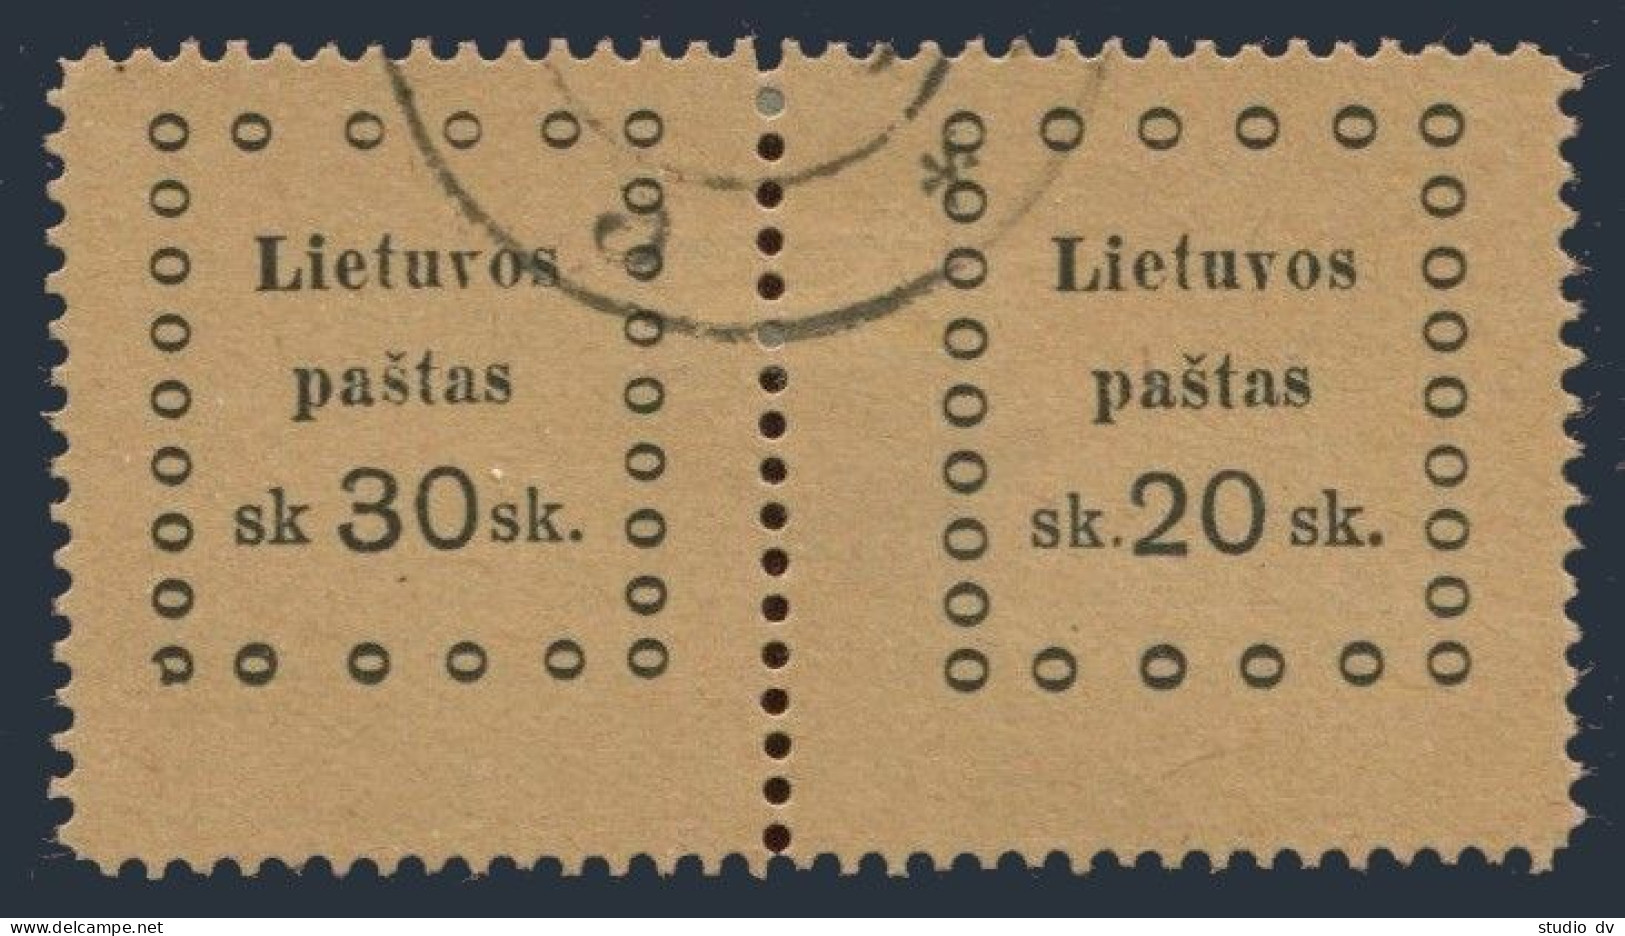 Lithuania 22-23 Pair,used.Michel 22-23 Pair. Third Kaunas Issue,1919. - Lituania